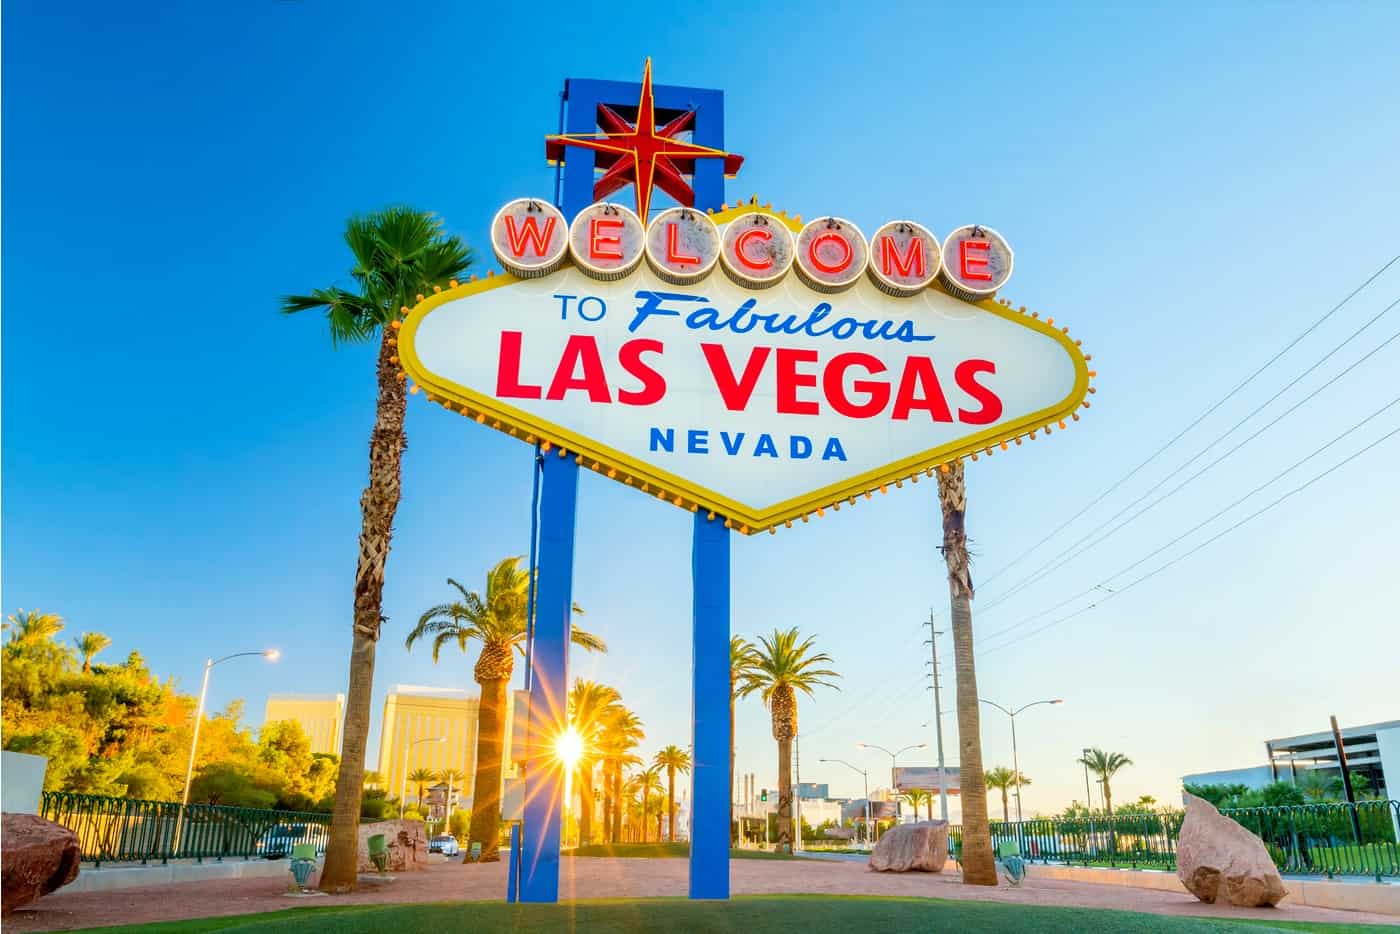 Las Vegas voted happiest holiday destination - Very Vintage Vegas